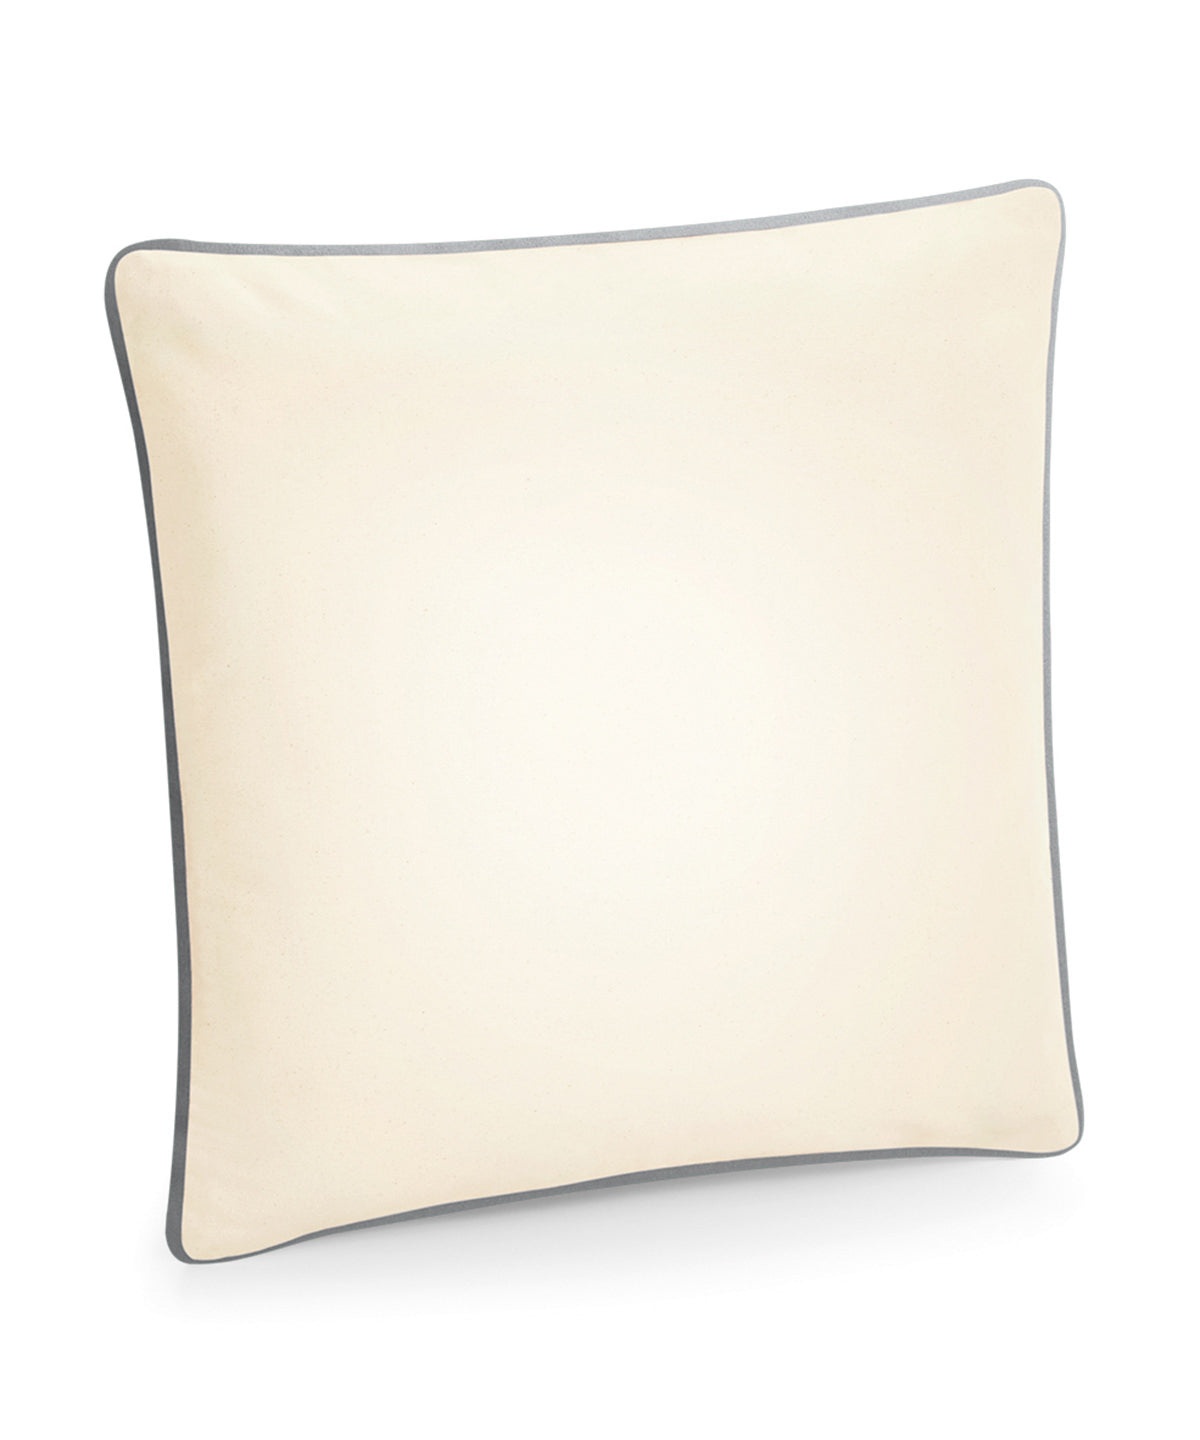 Púði hlífar - Fairtrade Cotton Piped Cushion Cover